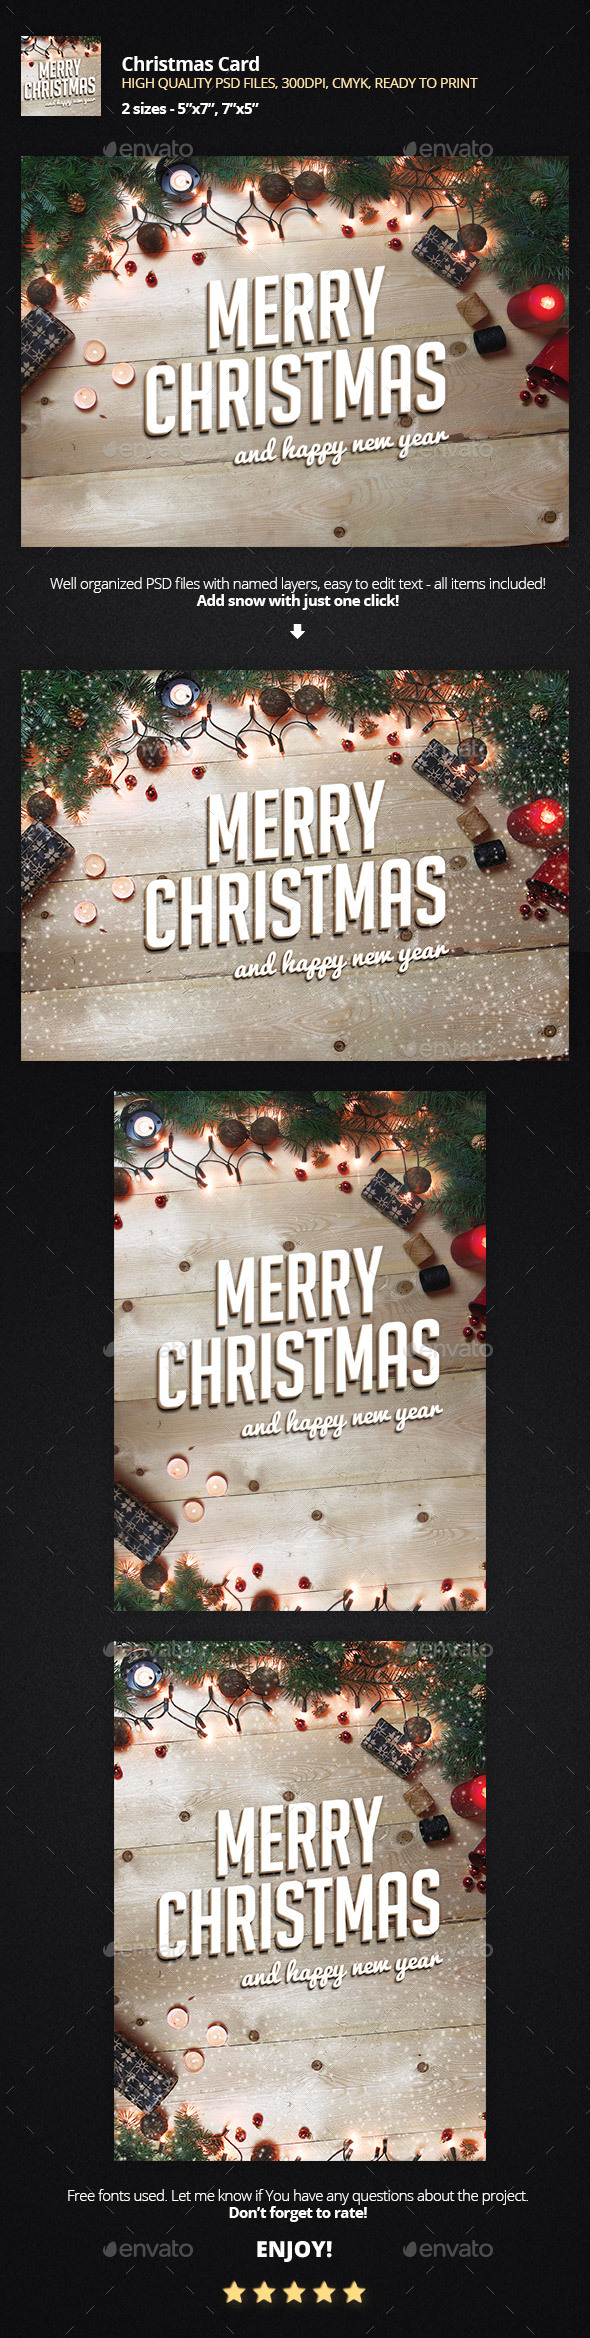 Christmas Greeting Card - Holiday Greeting Cards